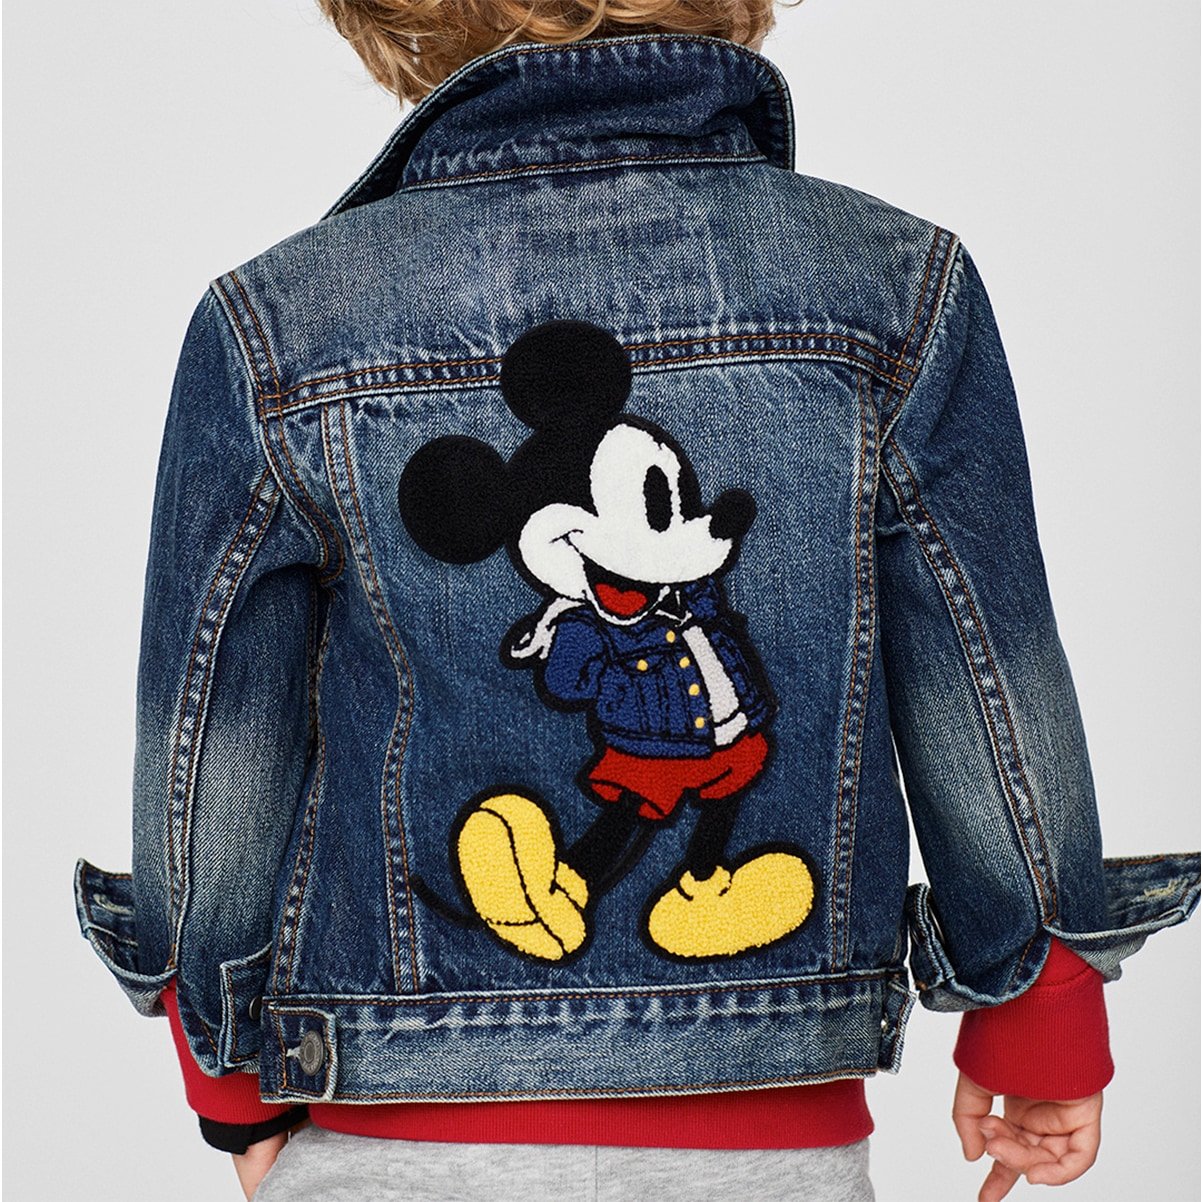 gap mickey mouse jean jacket